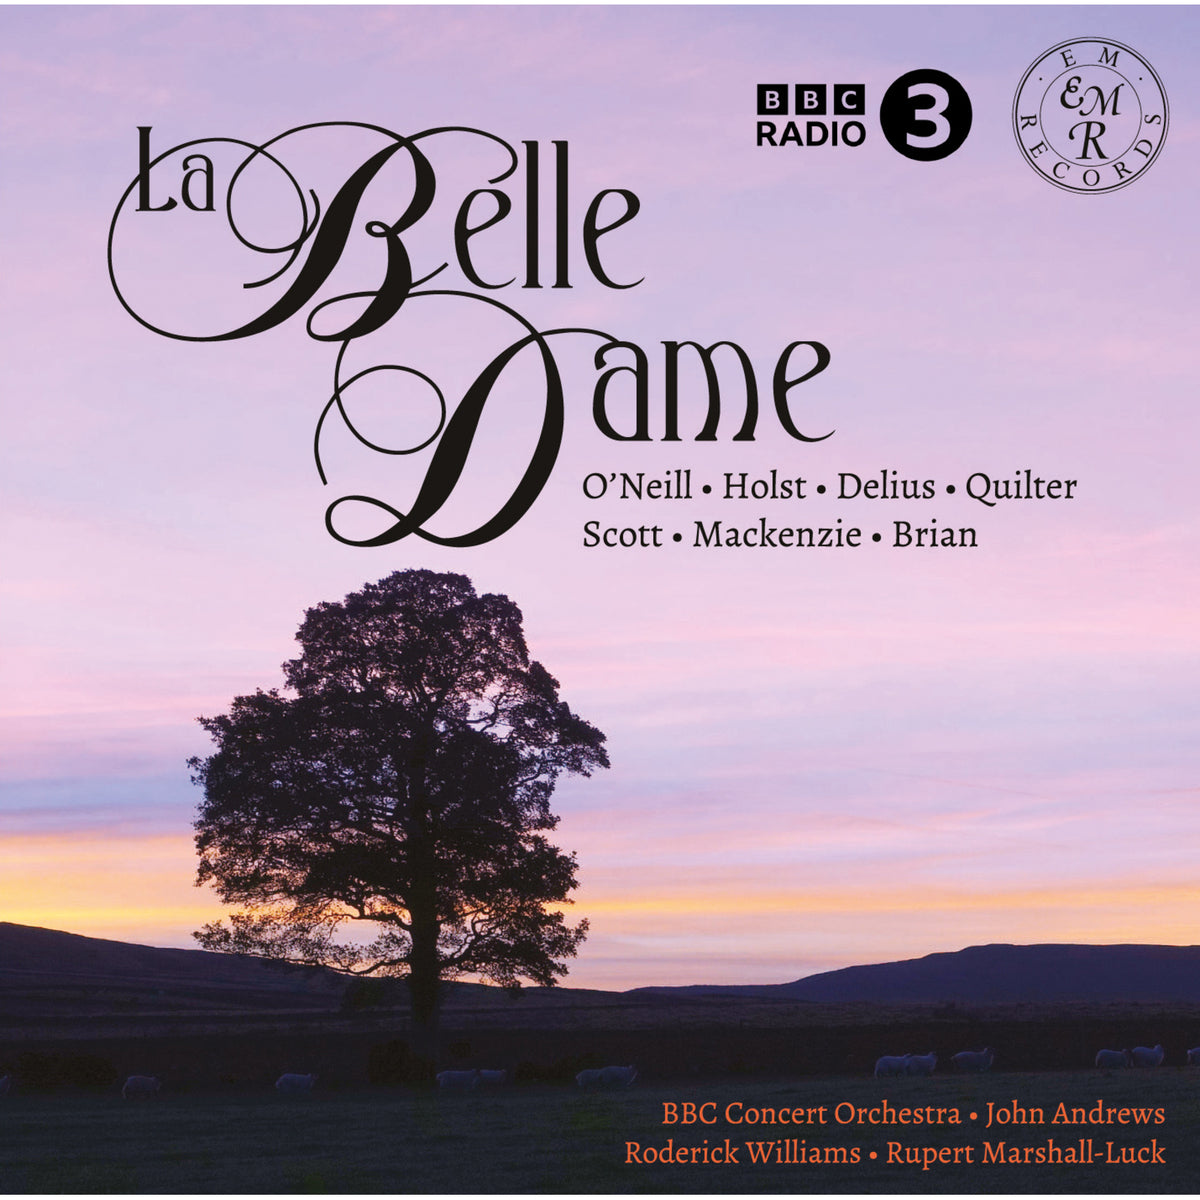 John Andrews, Roderick Williams, Rupert Marshall-Luck, BBC Concert Orchestra - La Belle Dame - EMRCD085